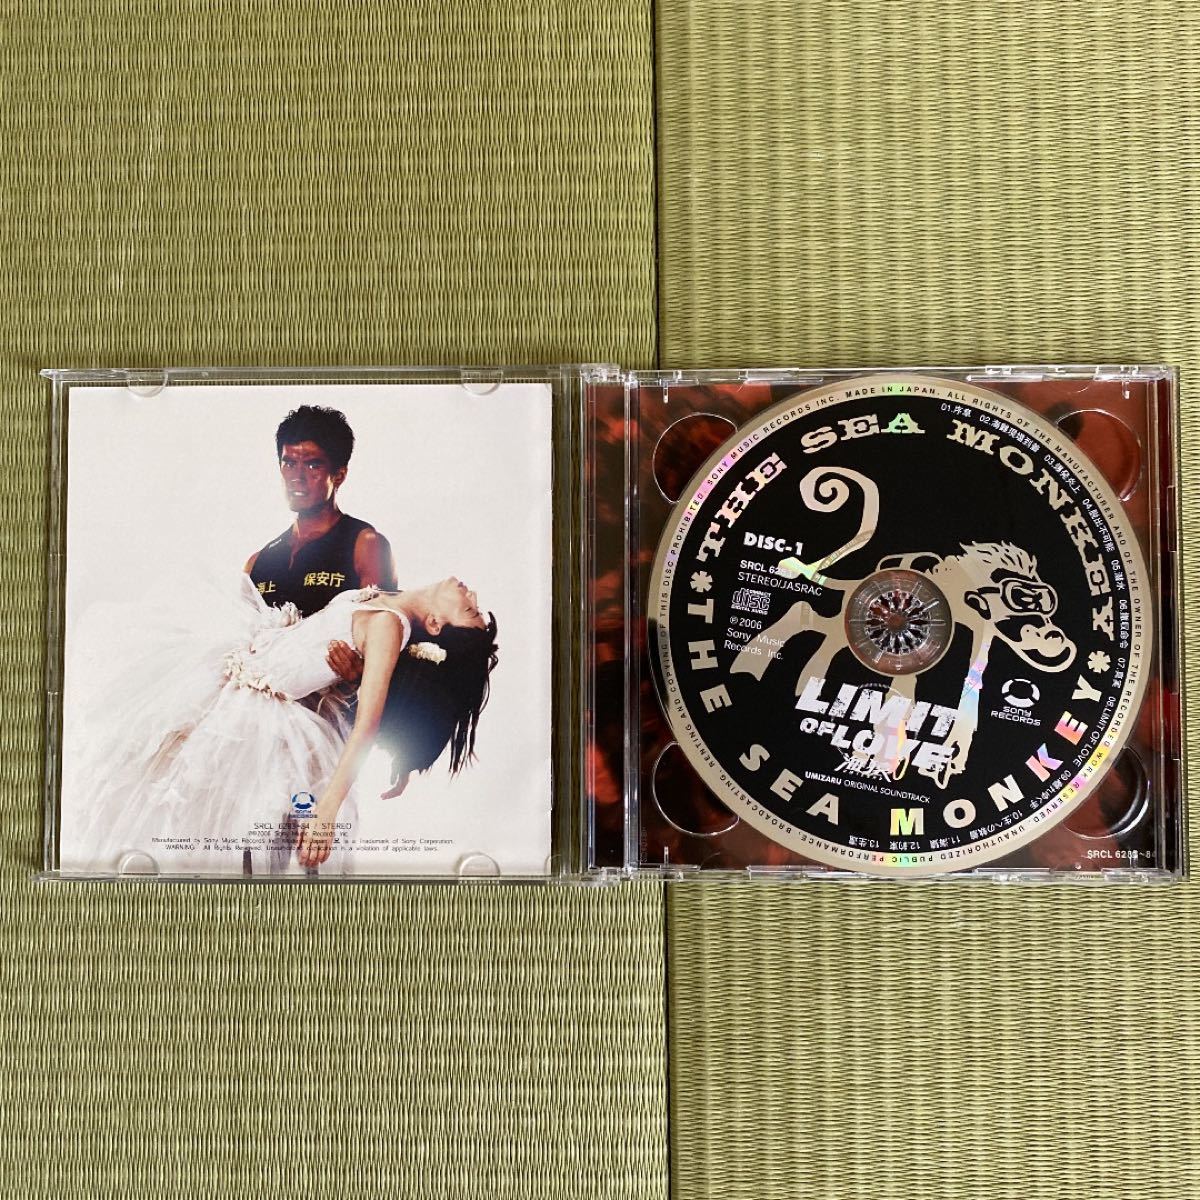 「LIMIT OF LOVE 海猿」オリジナル・サウンドトラック/佐藤直紀